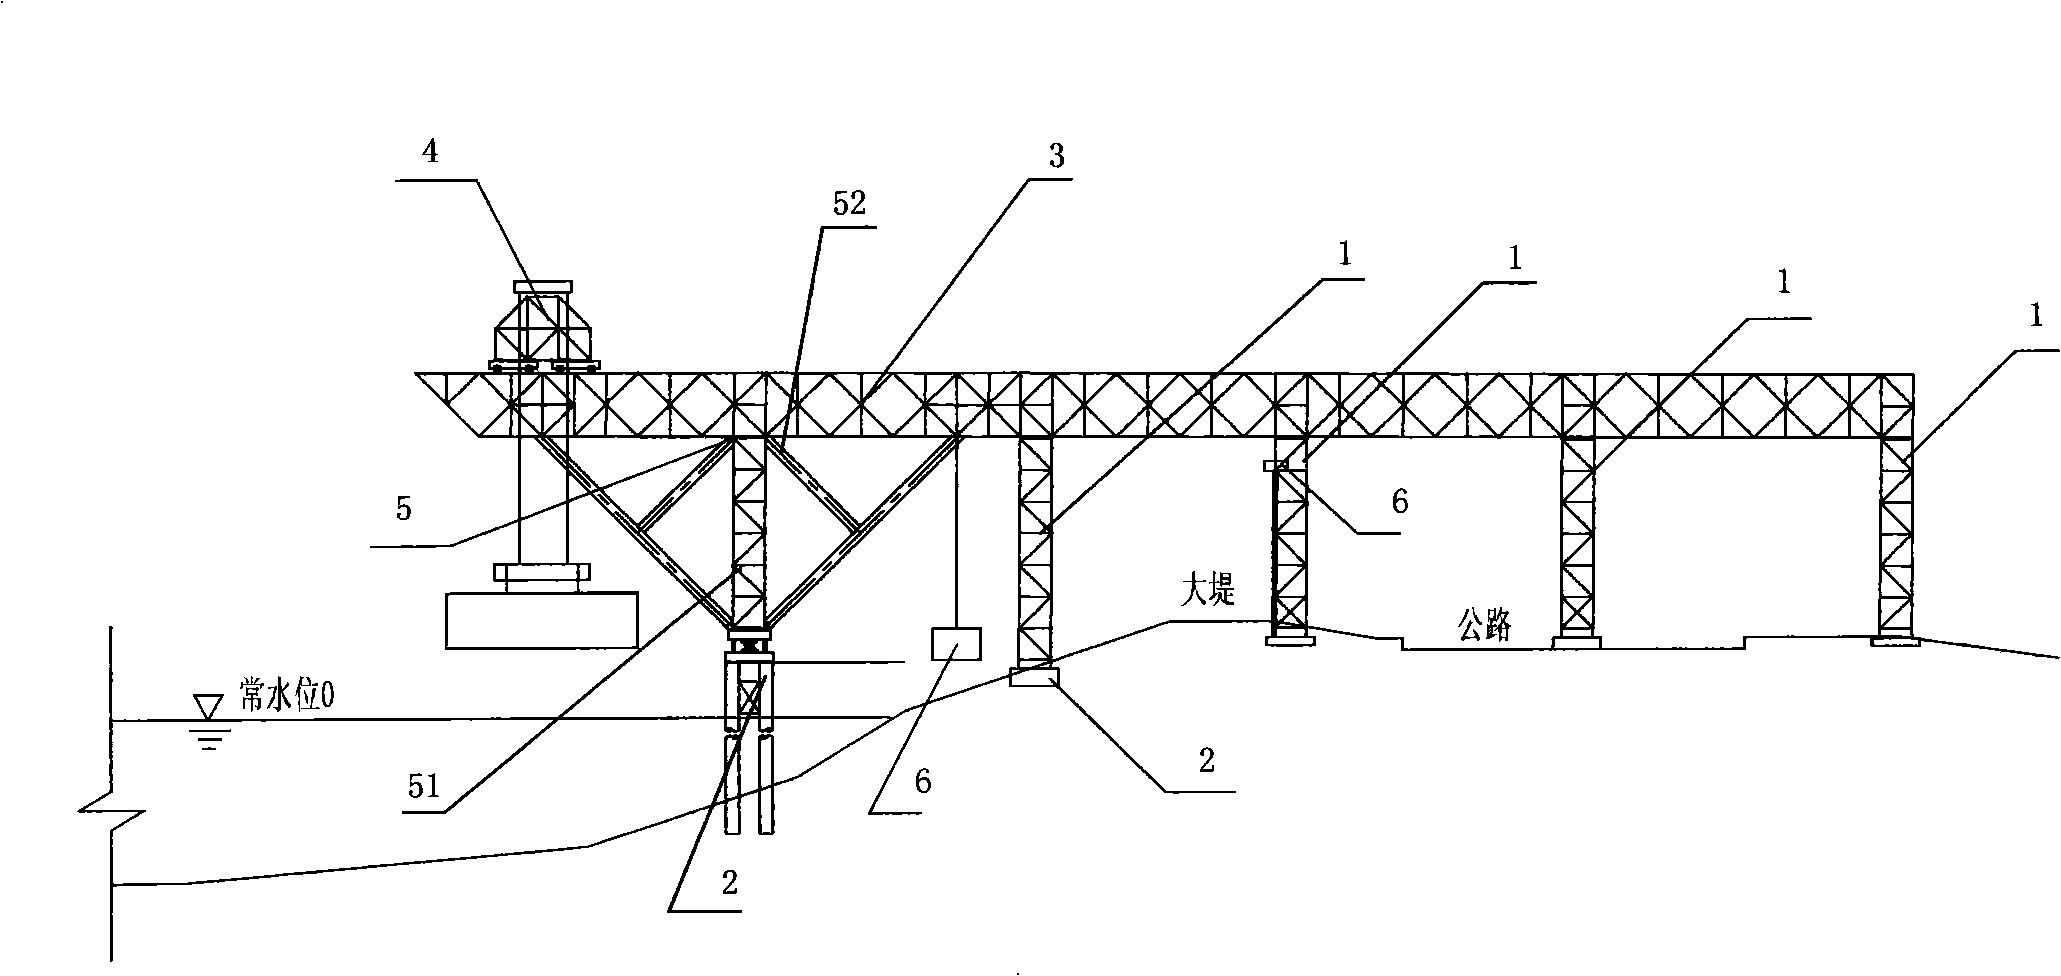 Wharf crane and construction method